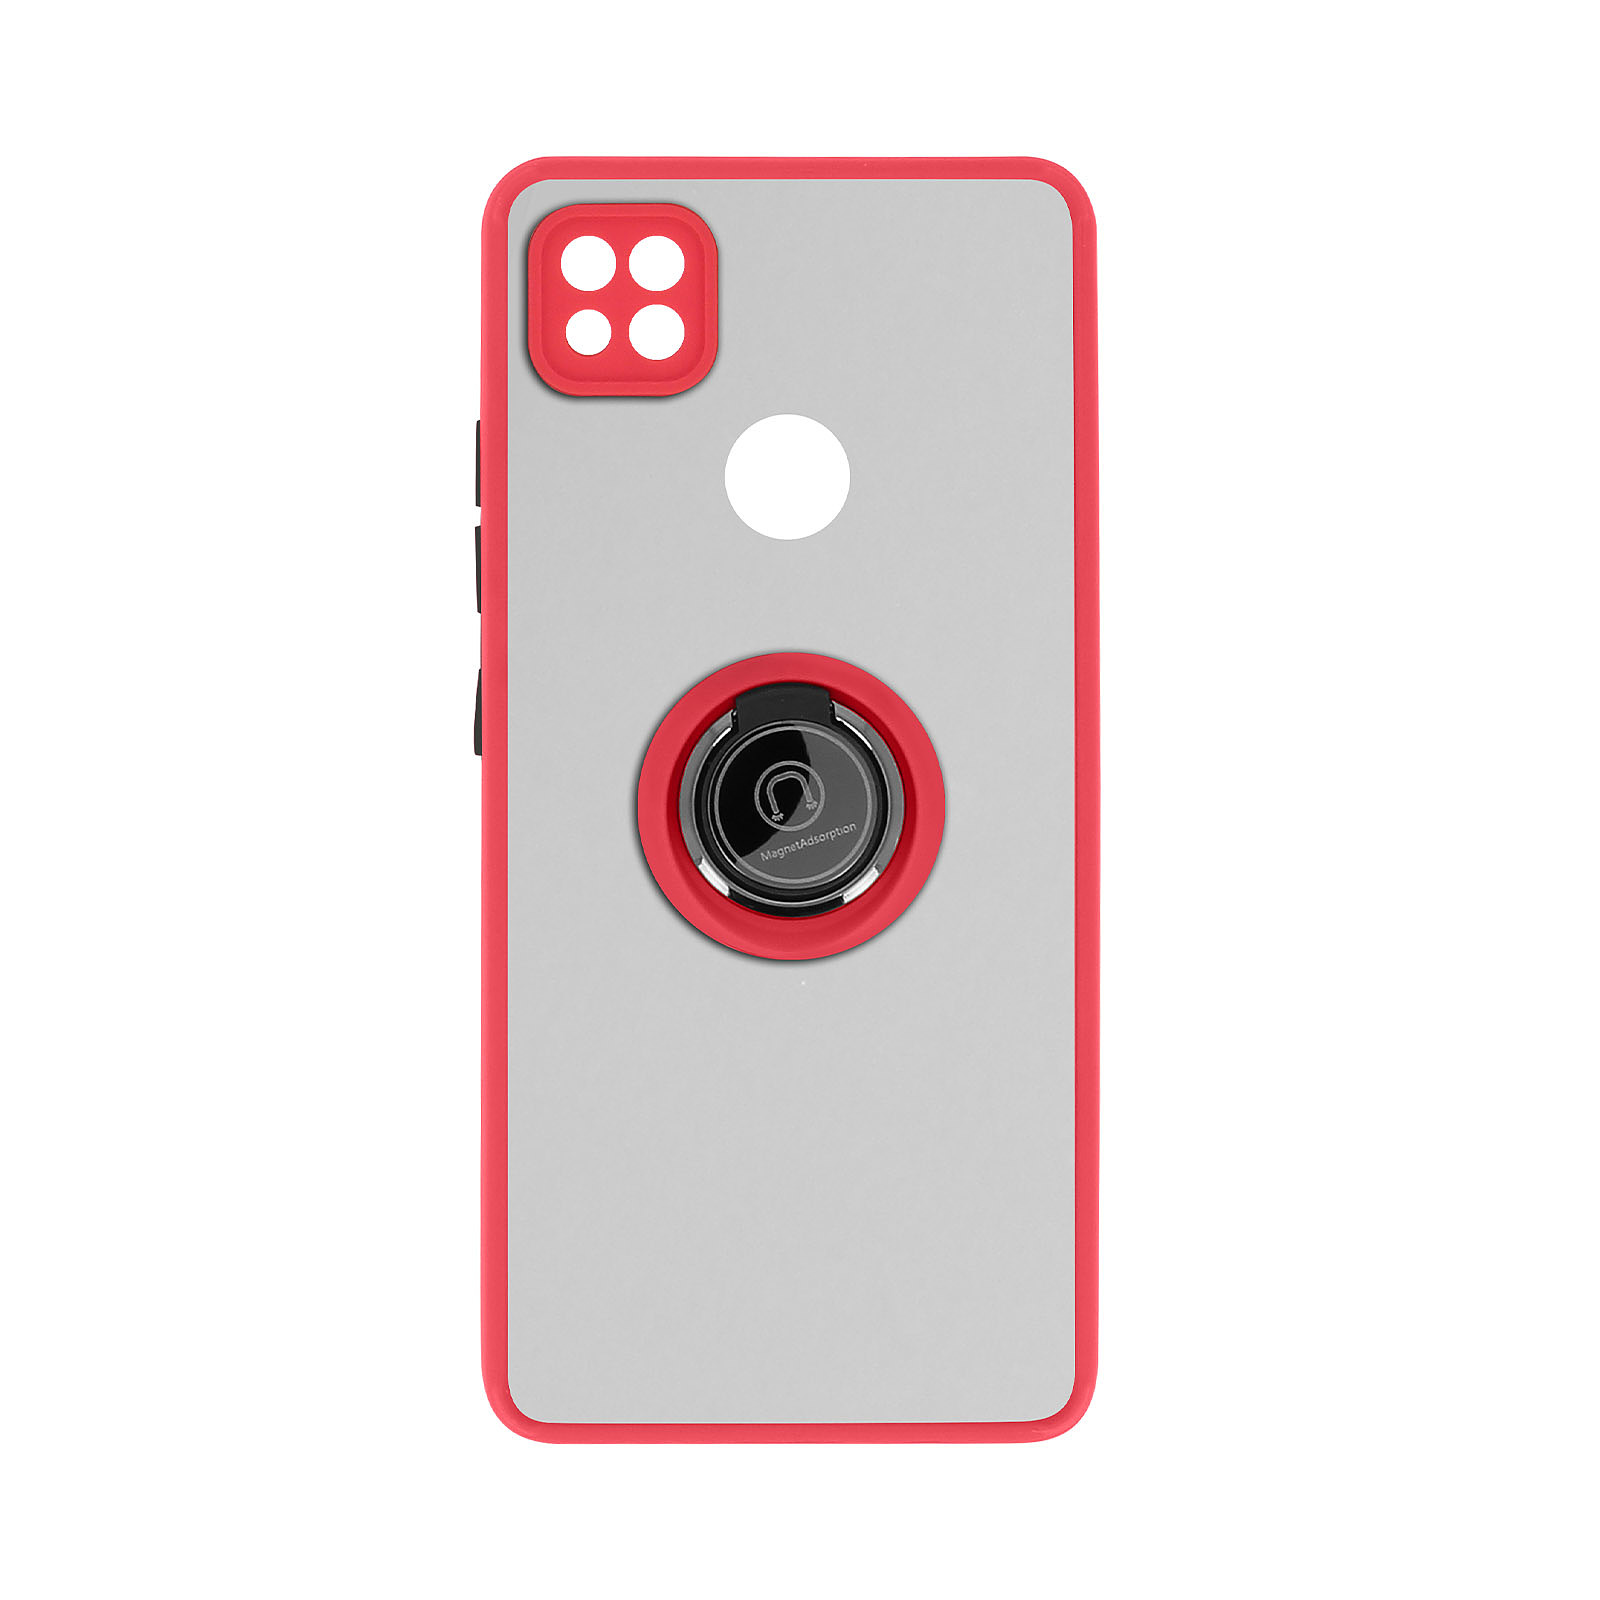 Avizar Coque pour Xiaomi Redmi 9C avec Bague Metallique Fonction Support Rouge - Coque telephone Avizar